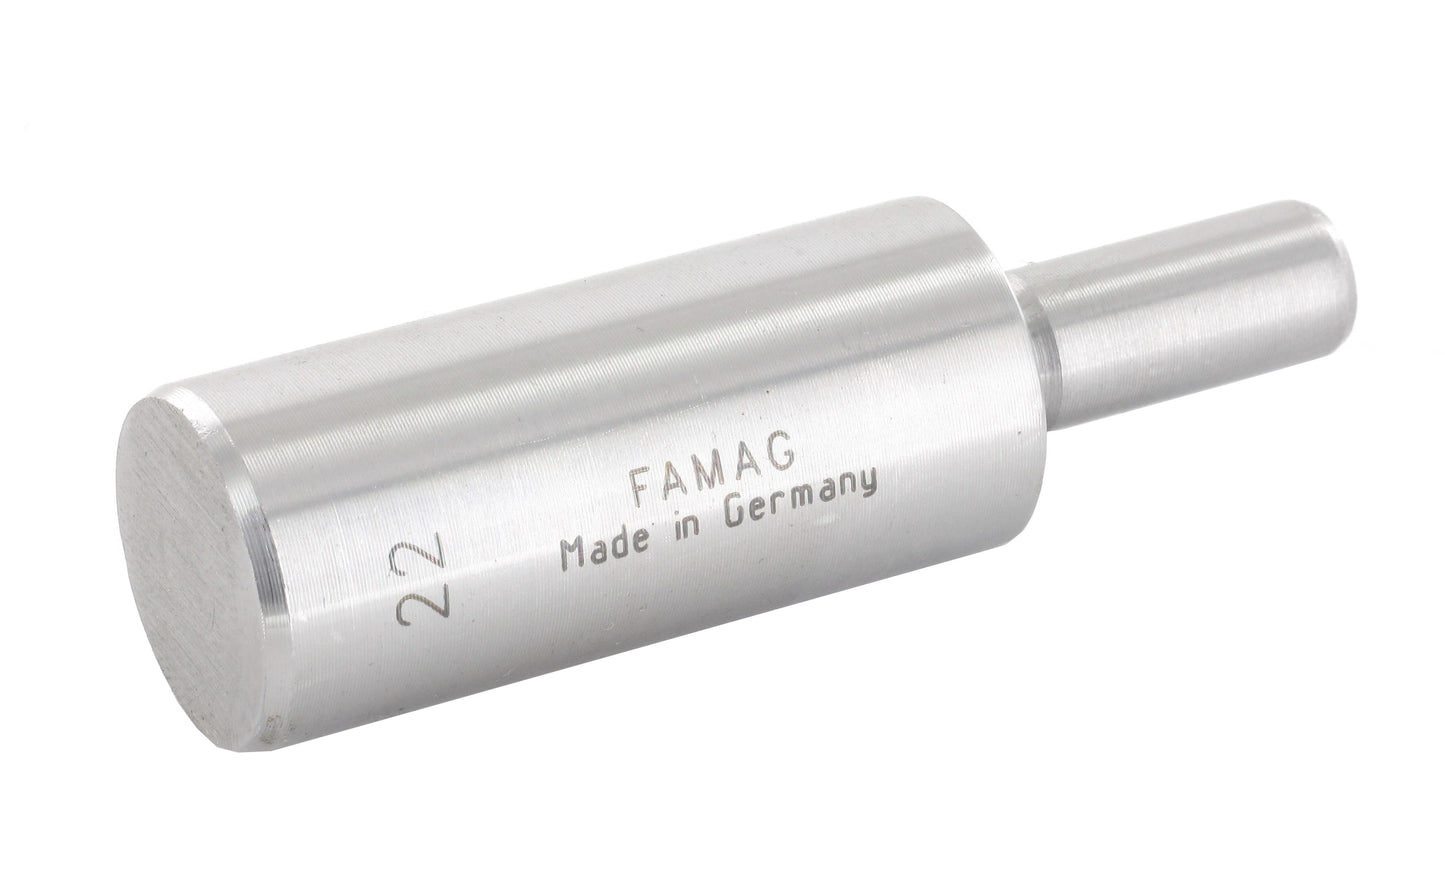 FAMAG 22 mm Guding Pin For Bormax 2.0 Prima 1614 Long Series 44.45mm - 120mm, 1619022